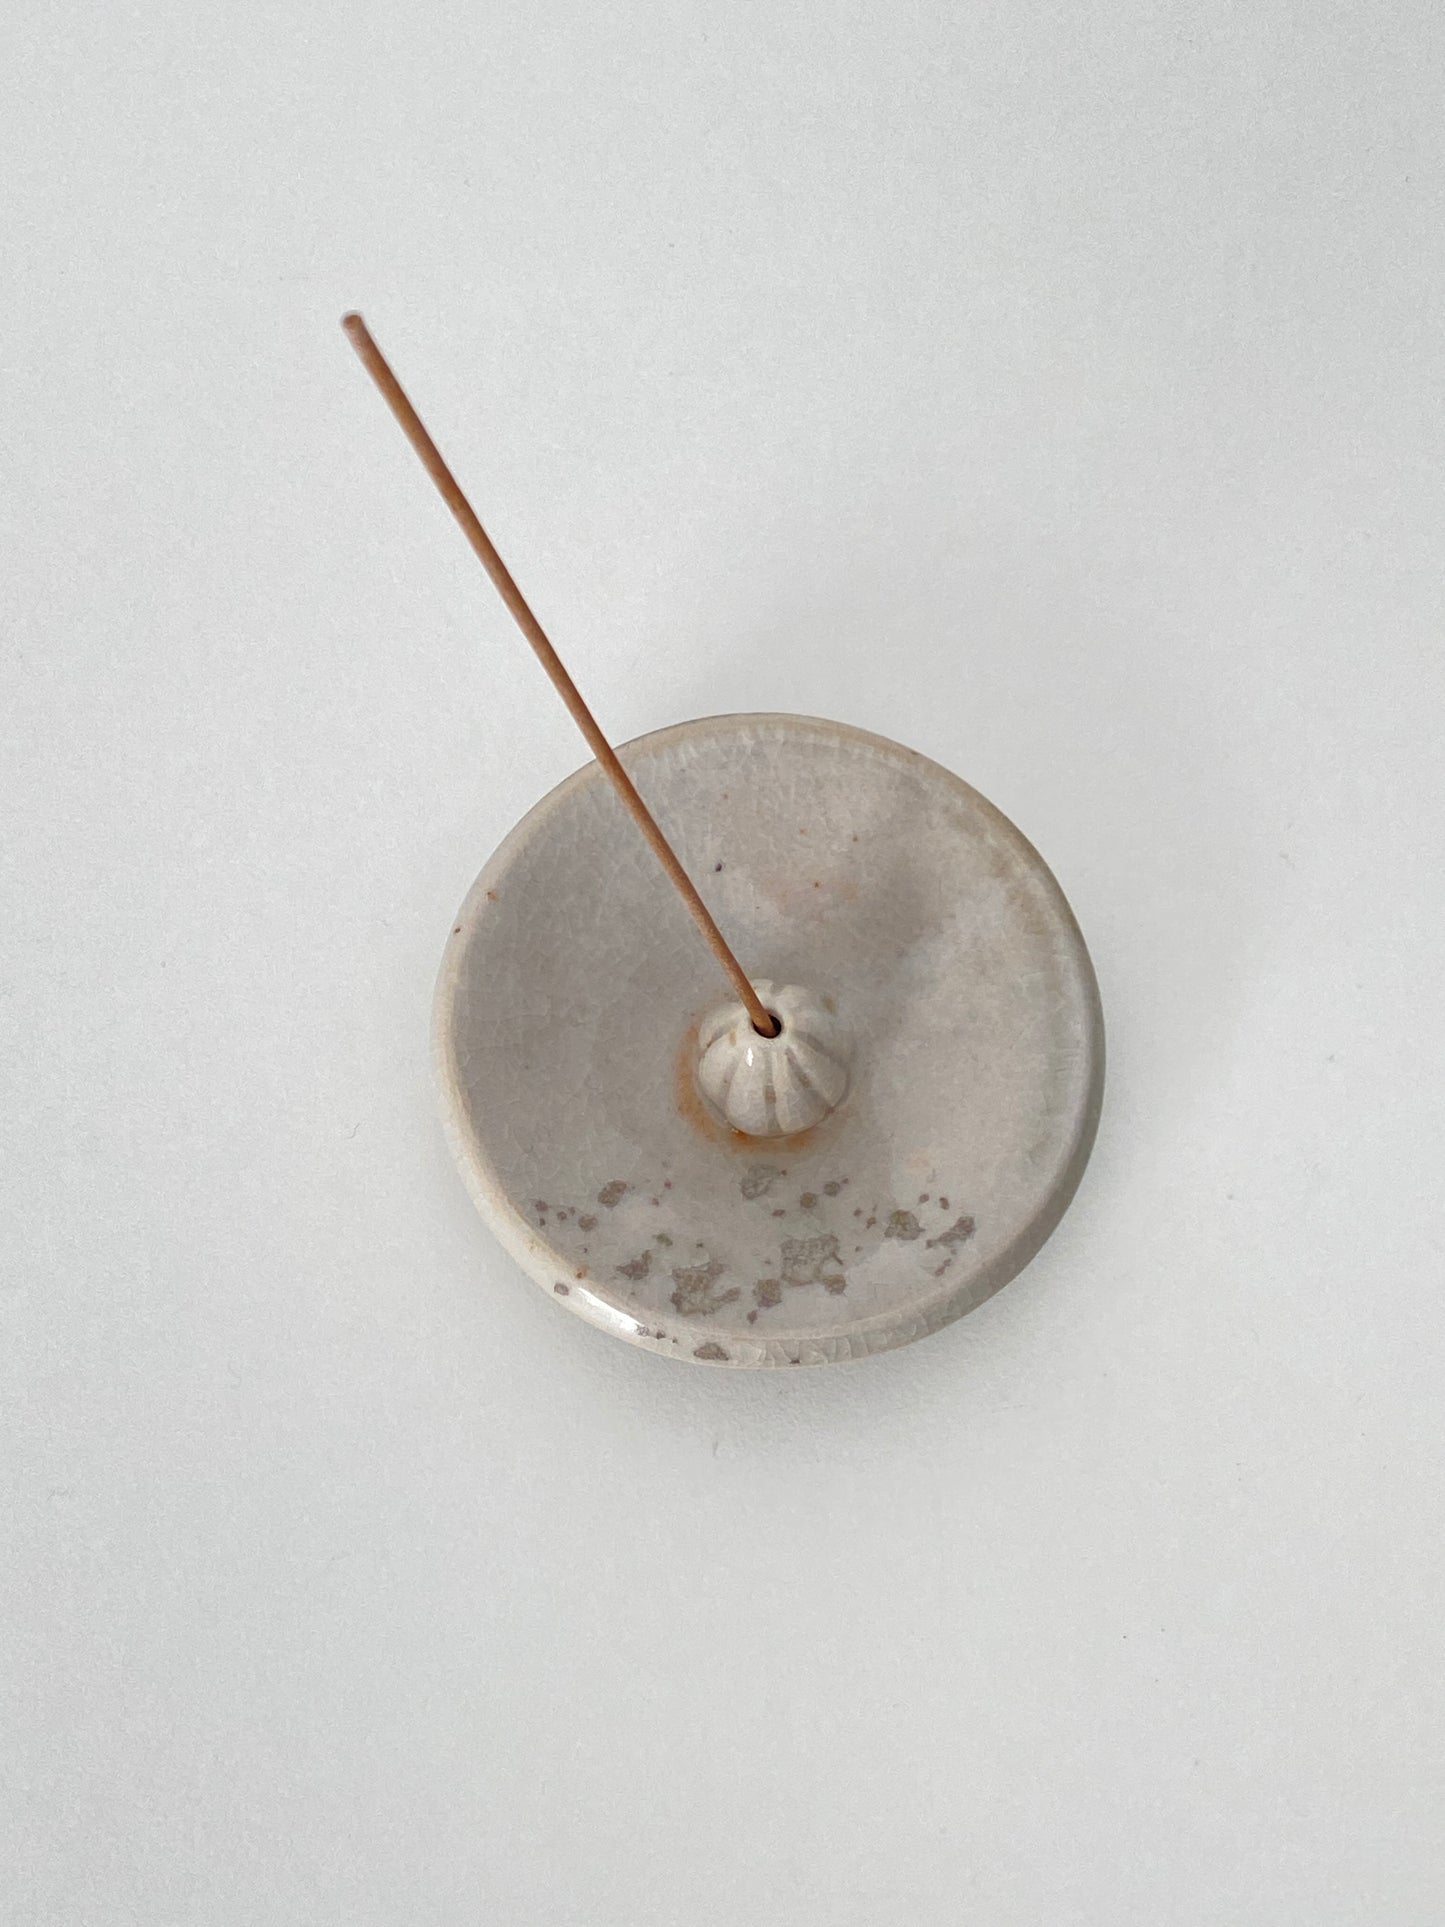 shino fired porcelain incense burner - #5